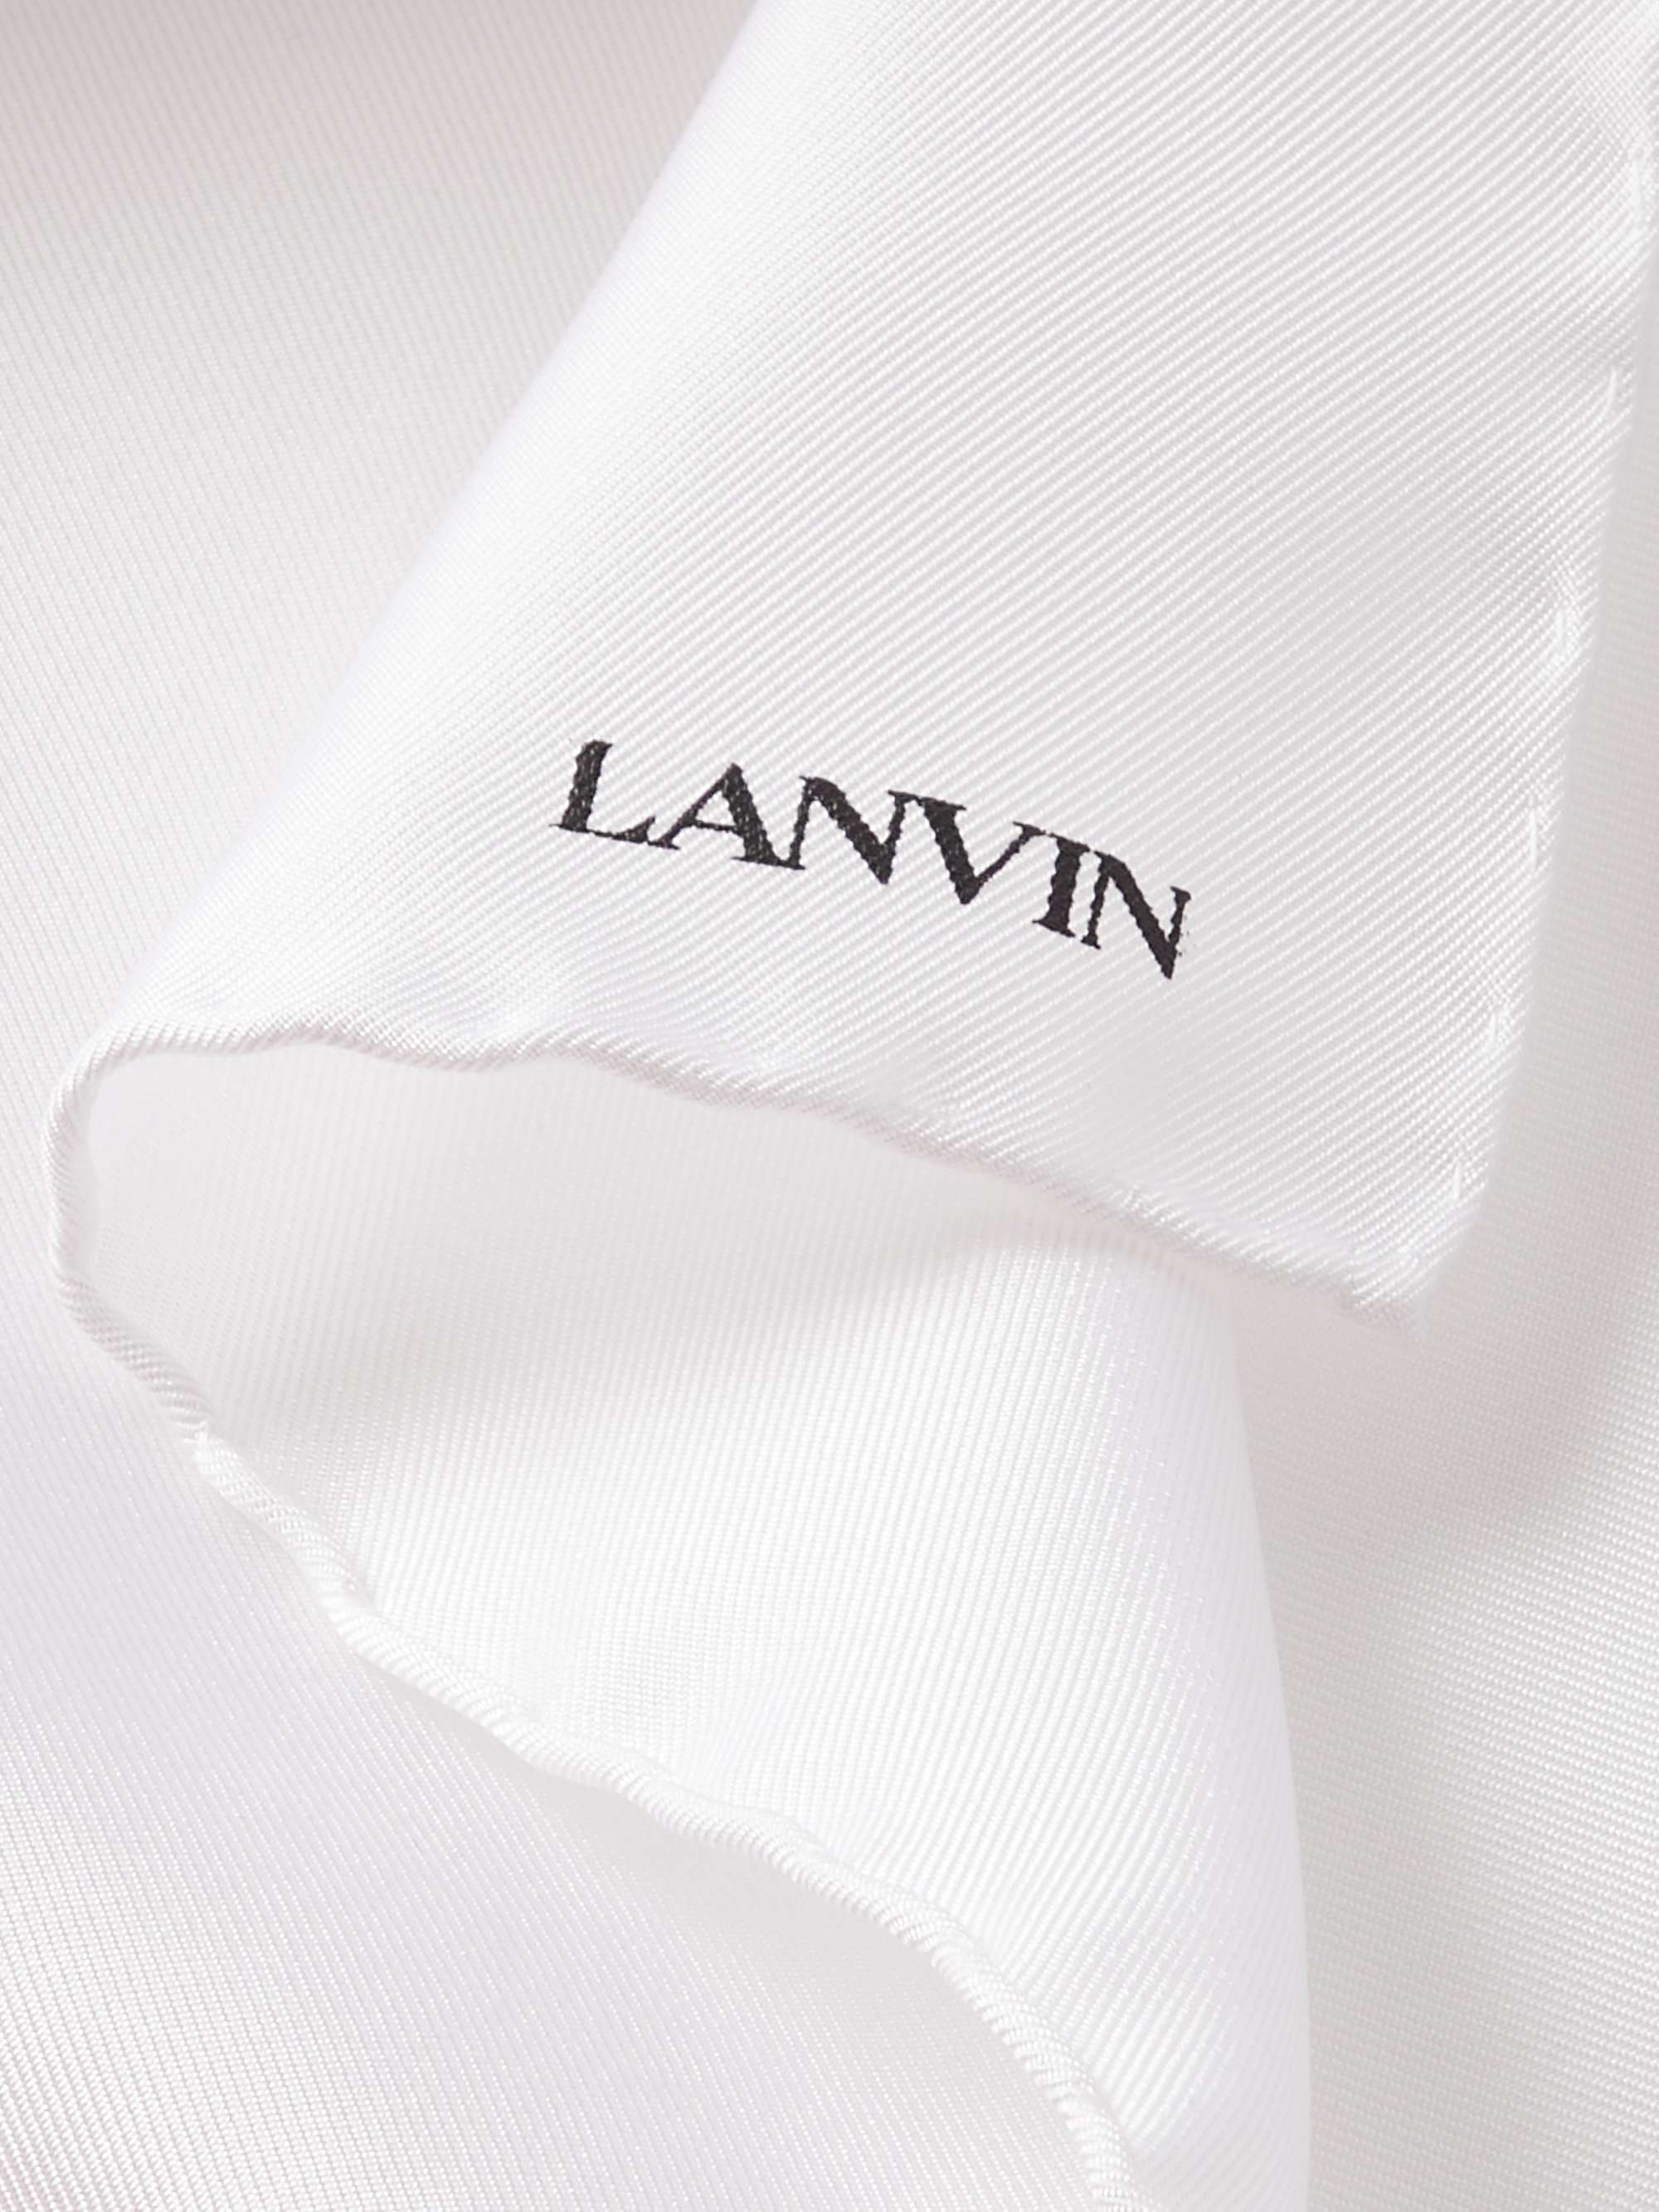 LANVIN Logo-Print Silk-Twill Pocket Square